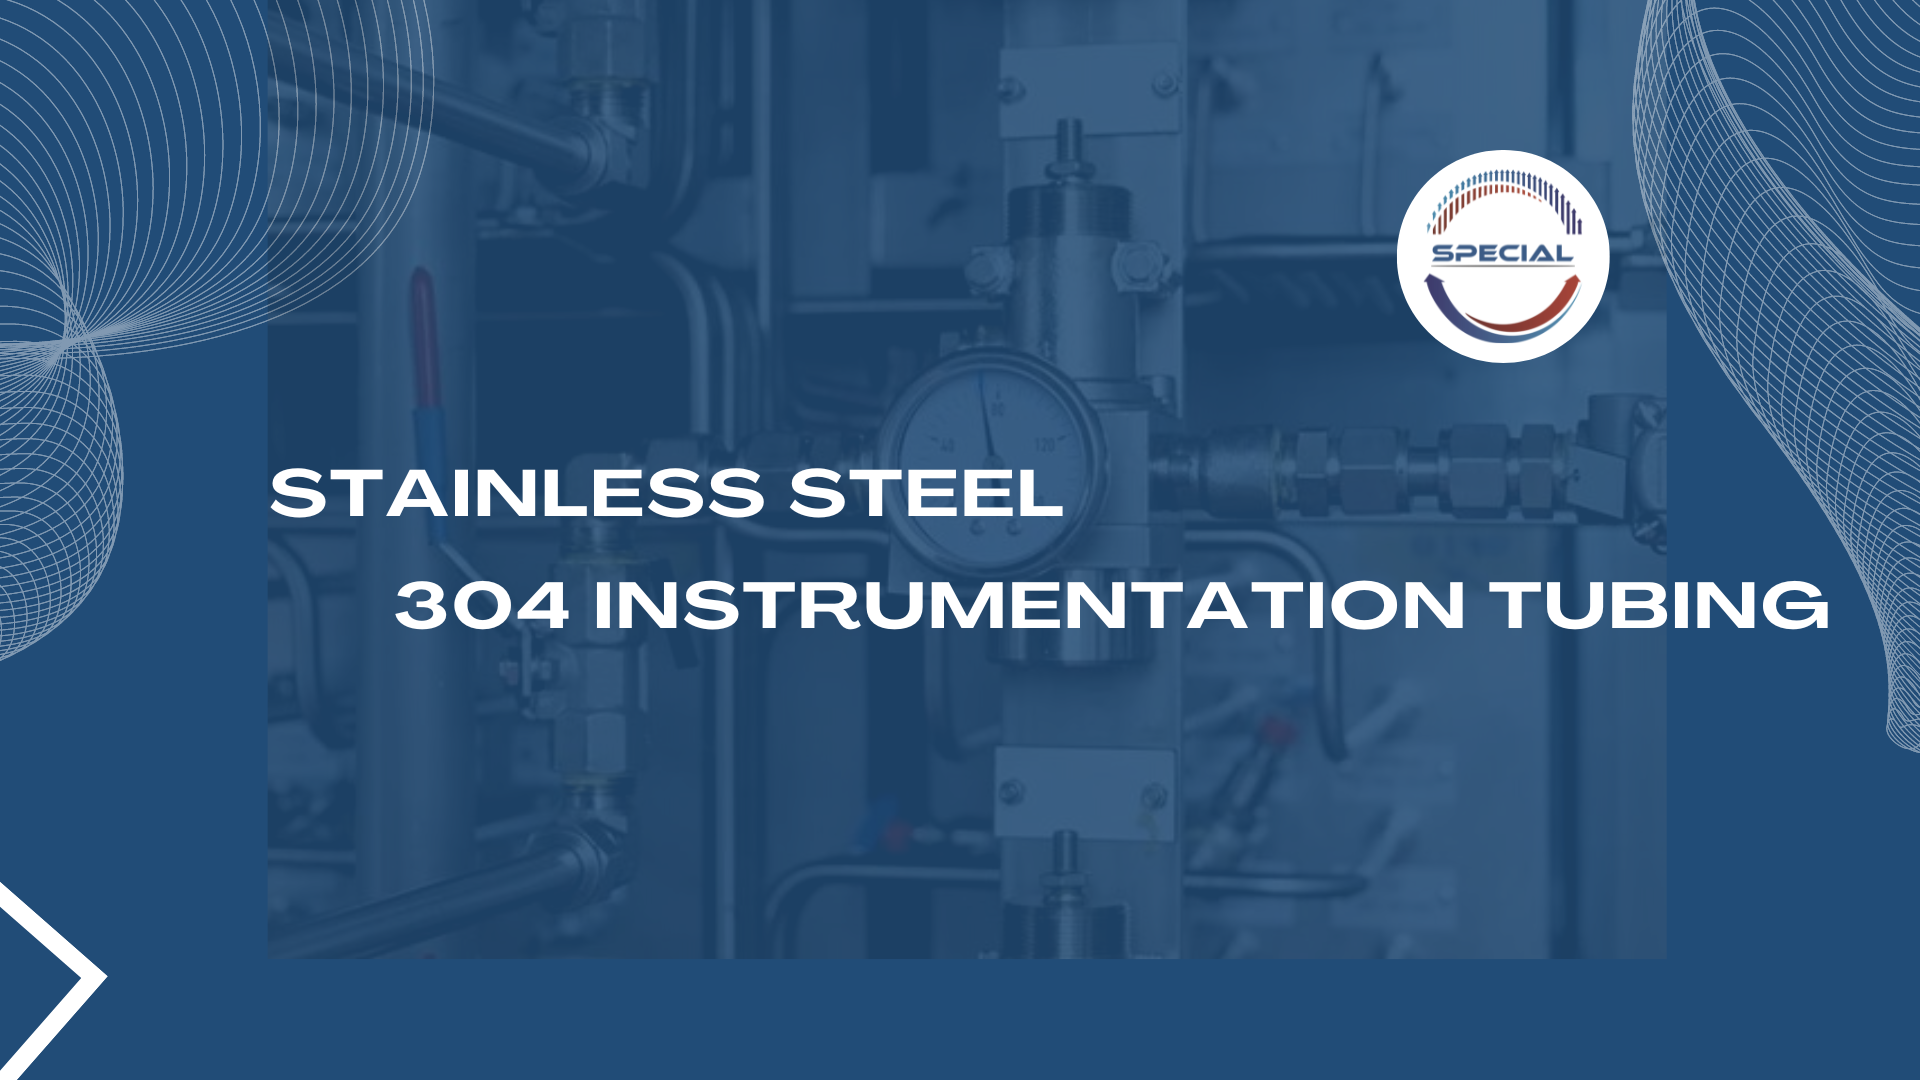 Stainless steel 304 instrumentation tubing